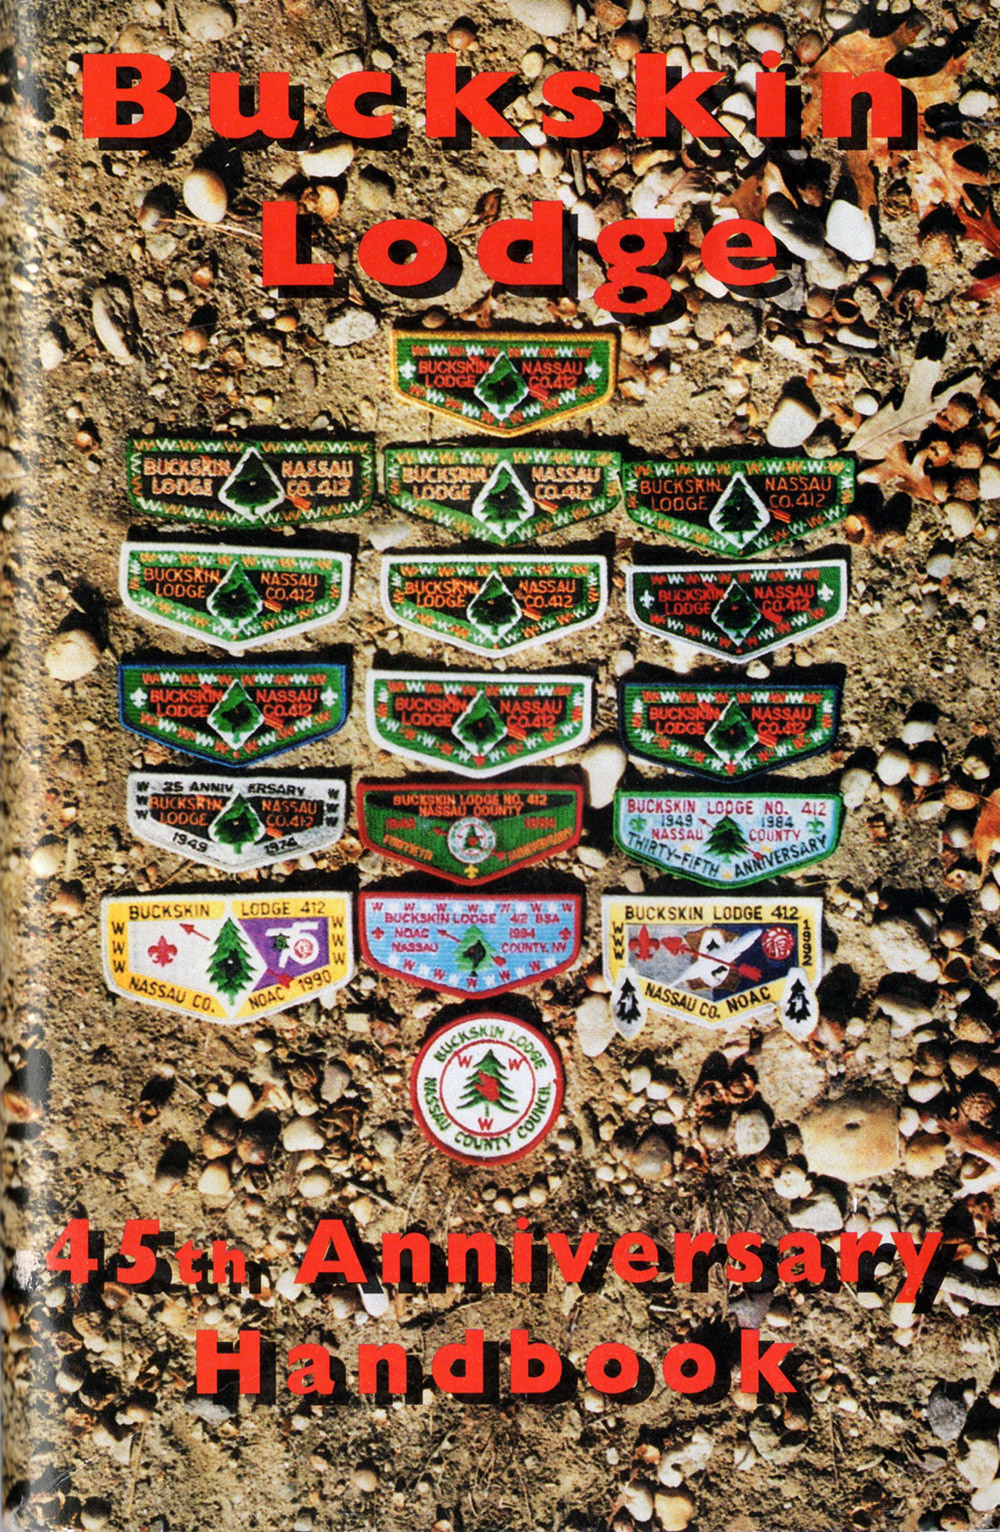 1994 Handbook